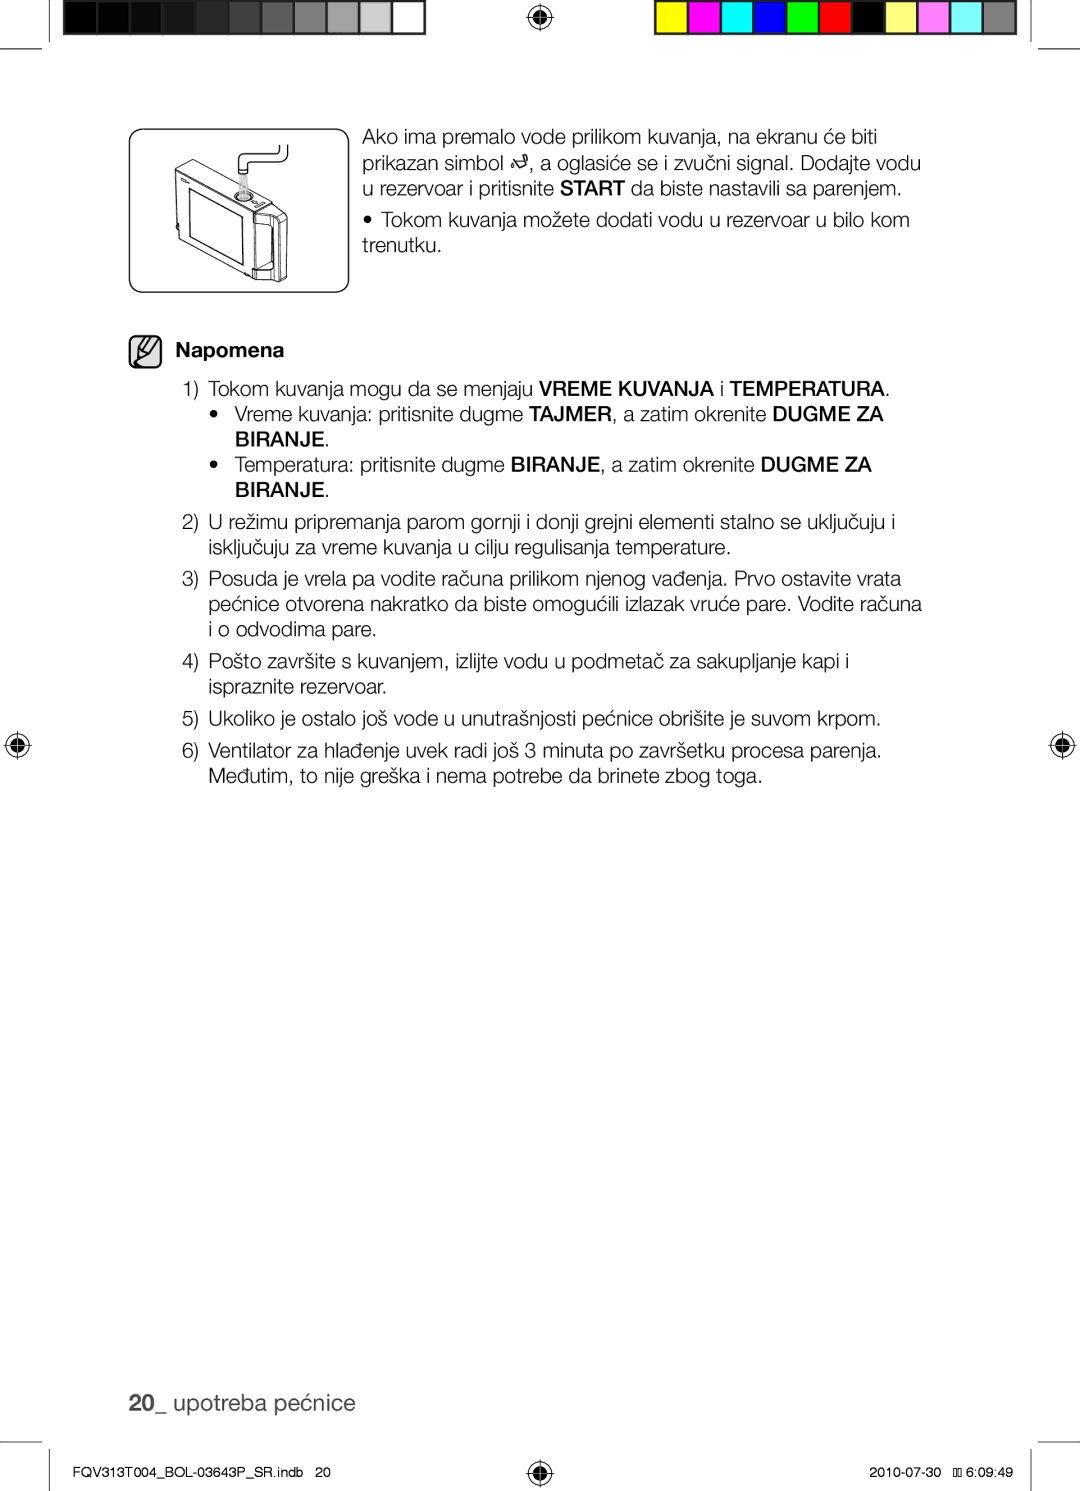 Samsung FQV313T004/BOL manual Napomena 